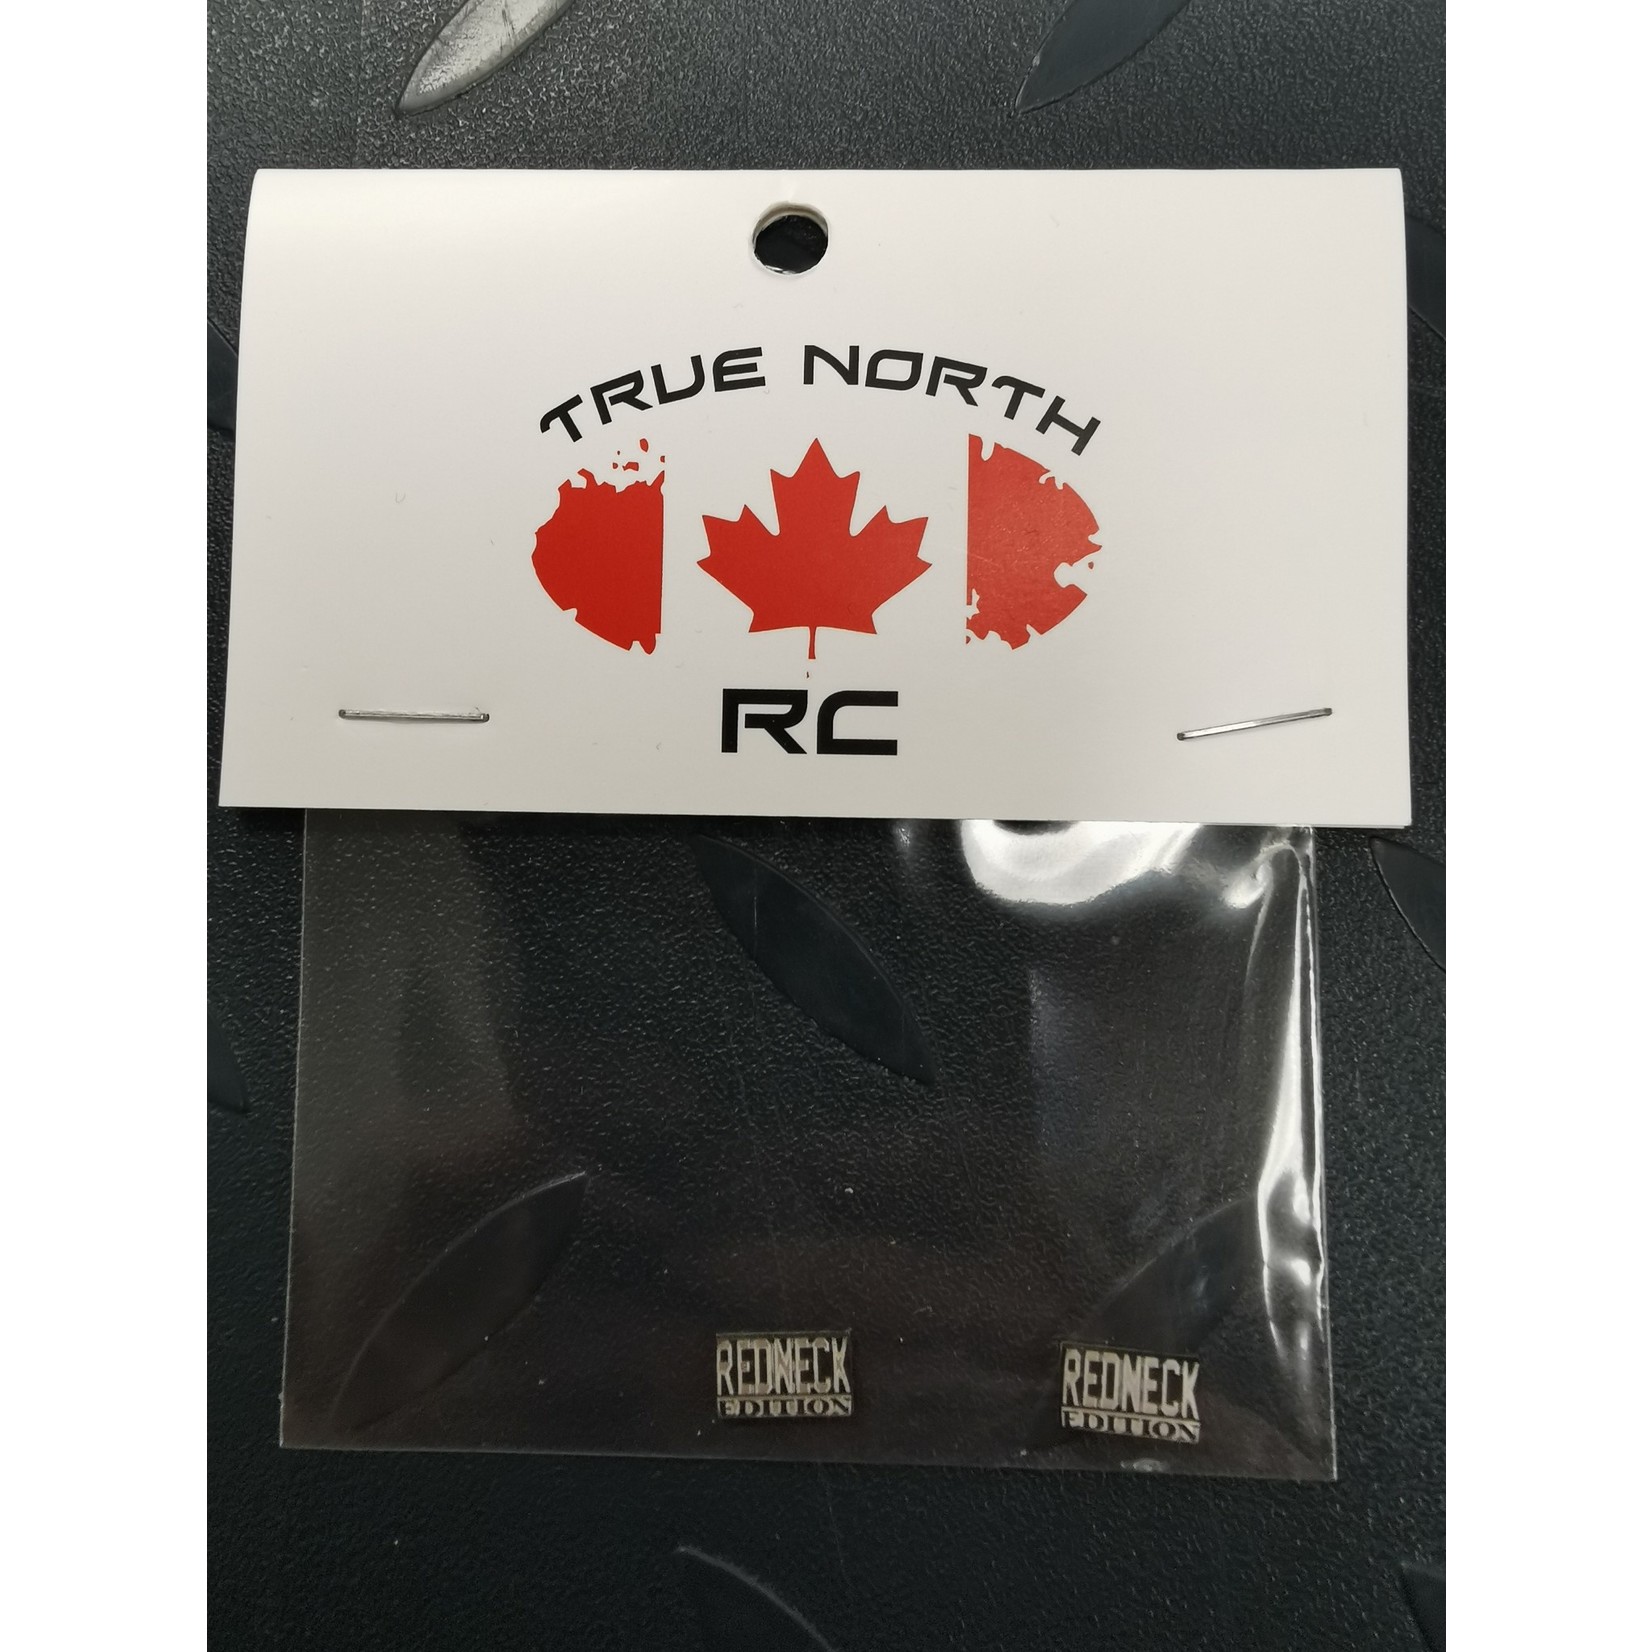 True North RC 1/10 Scale Car Badges - "Redneck" Edition